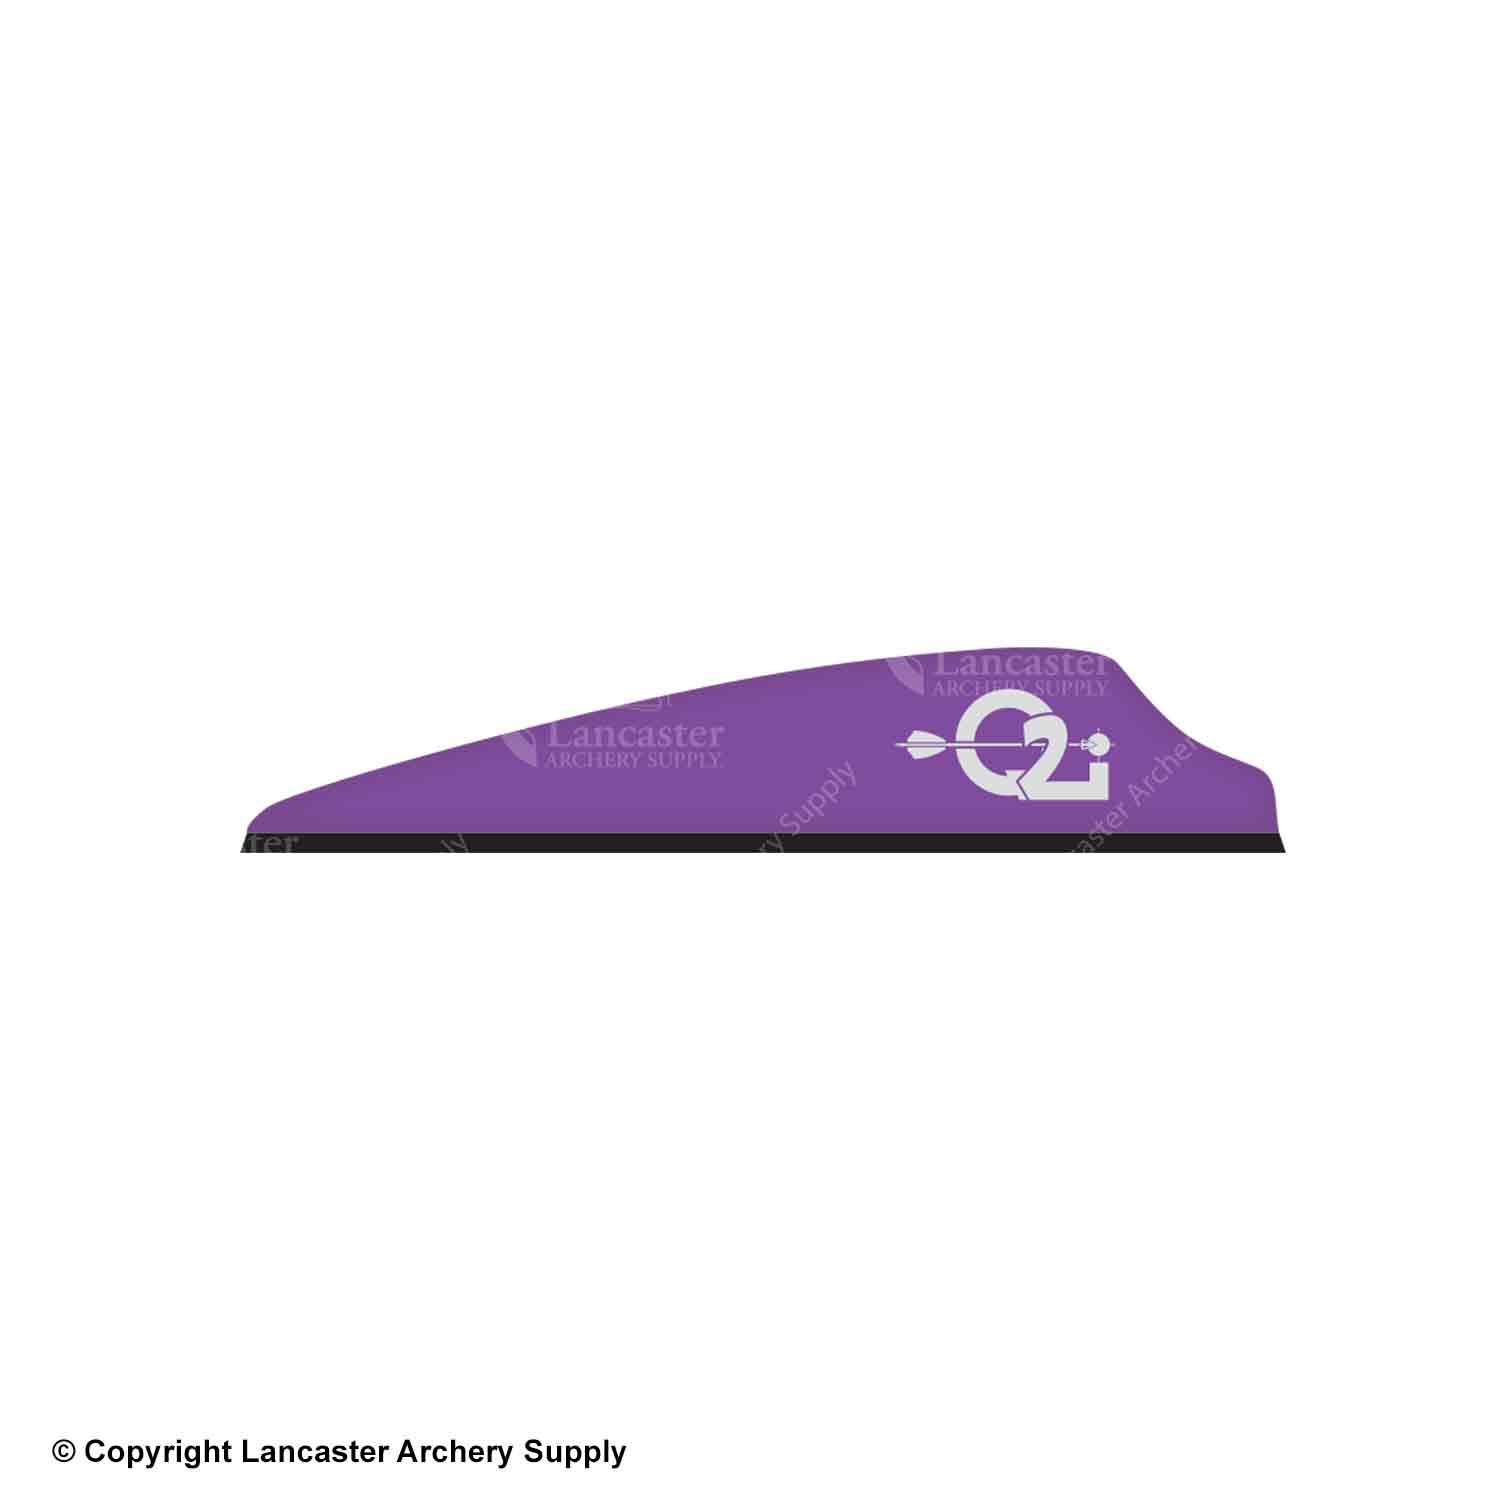 Shield cut vane that is light purple, has a black base, and a silver Q2i logo.